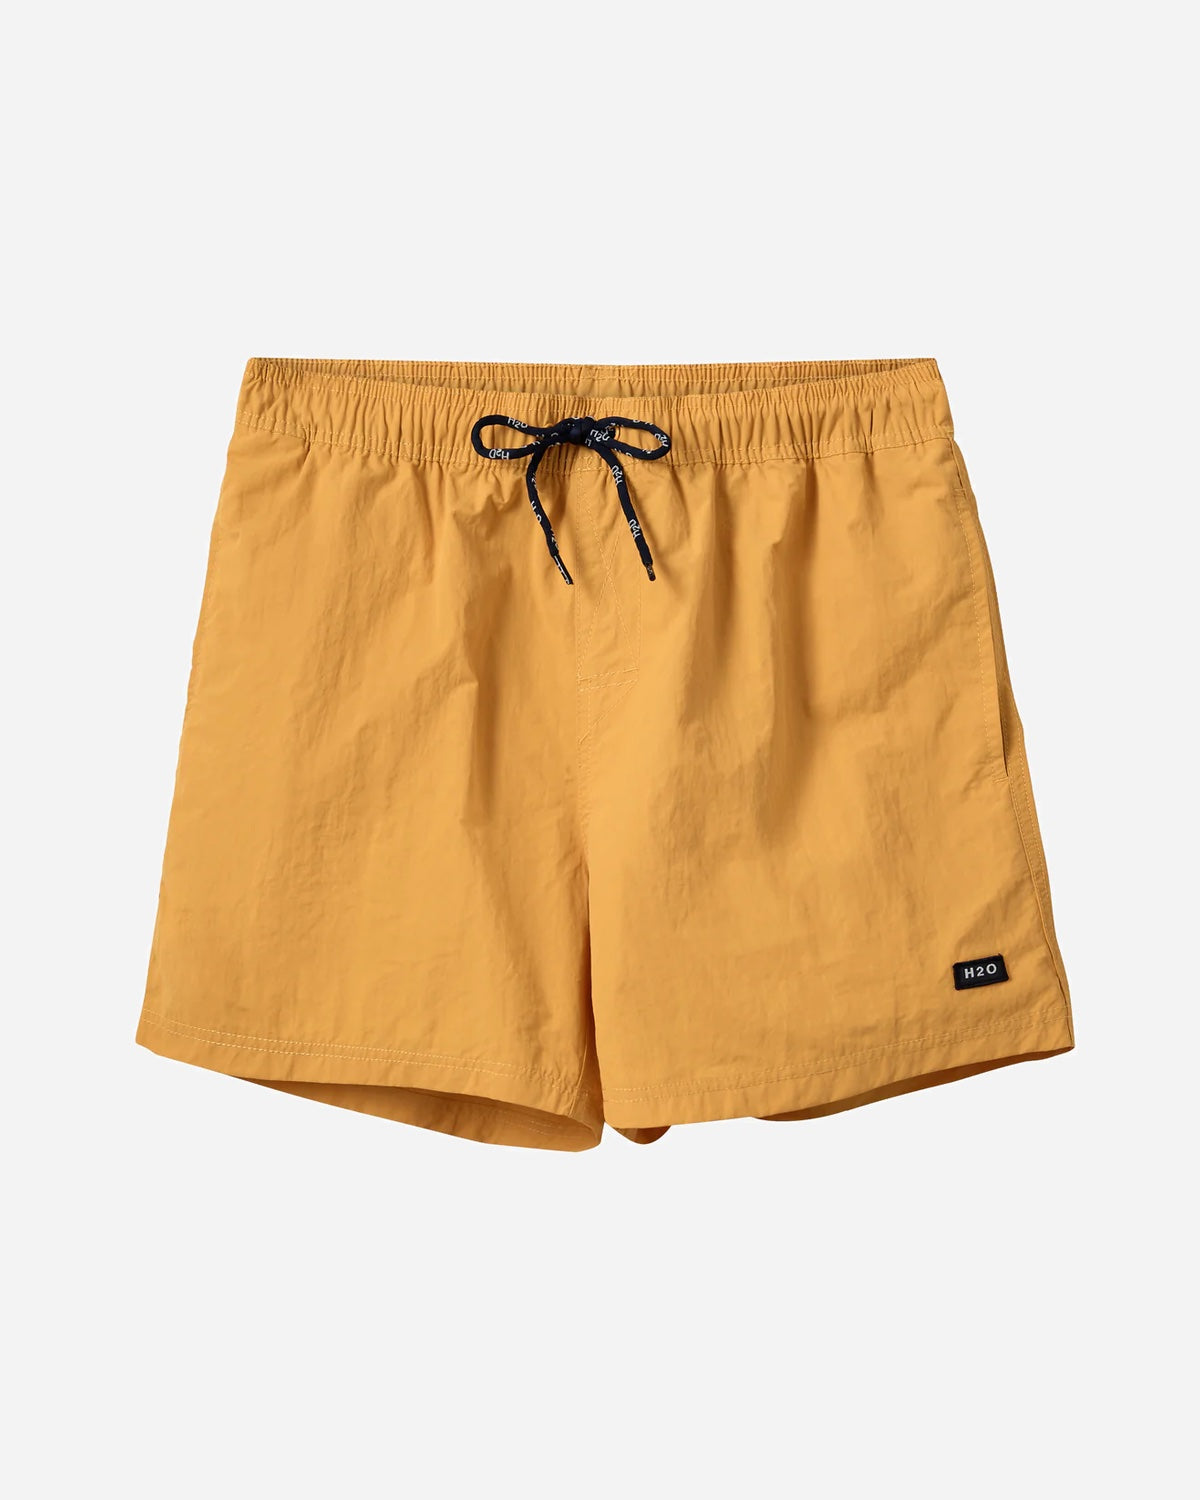 Leisure Swim Shorts - Apricot